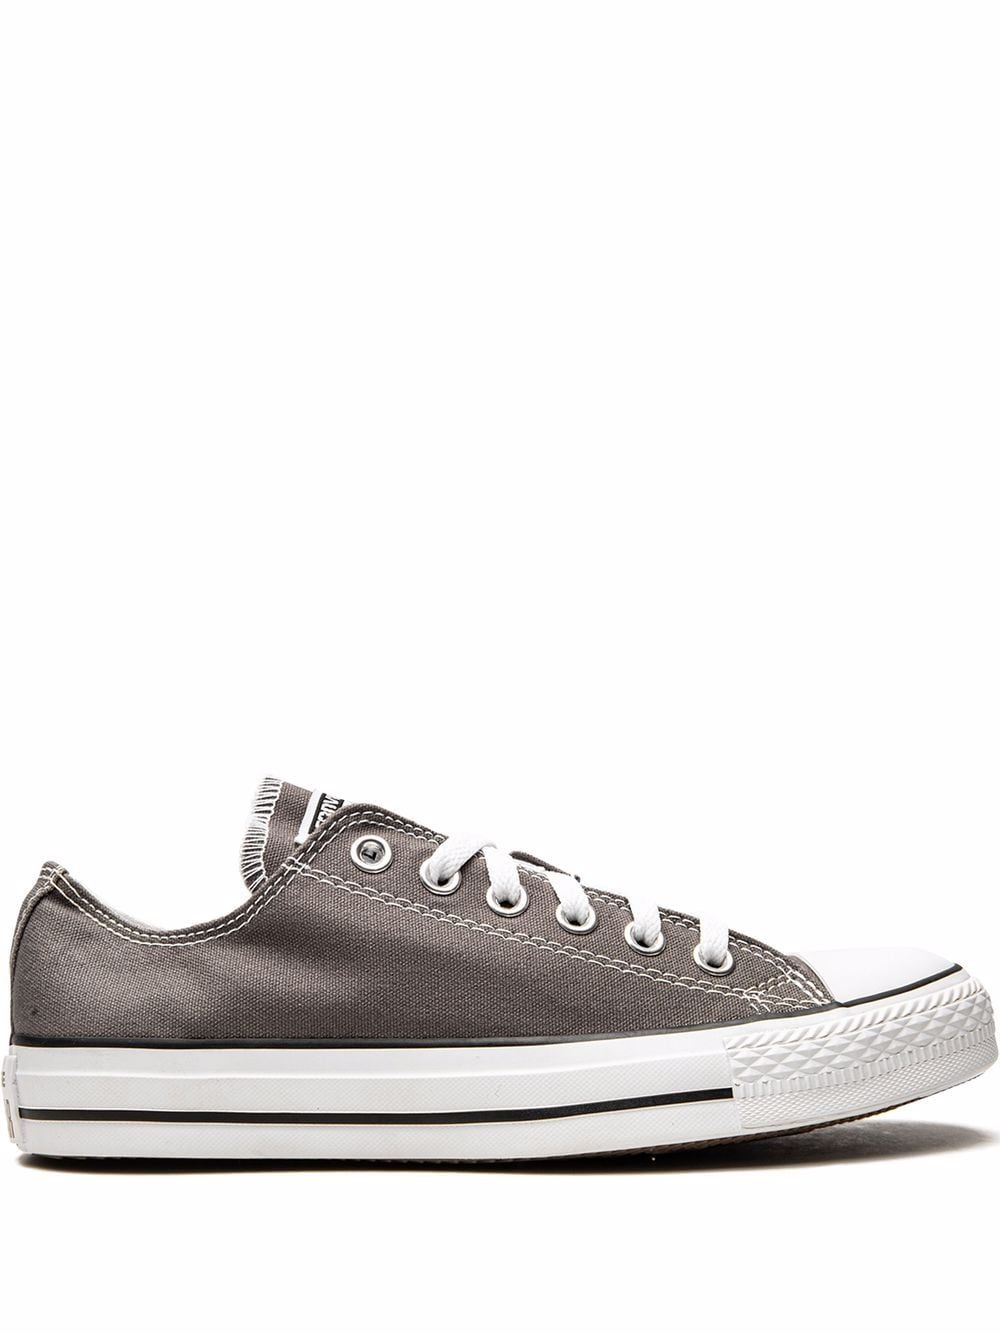 Converse All Star OX sneakers - Grey von Converse